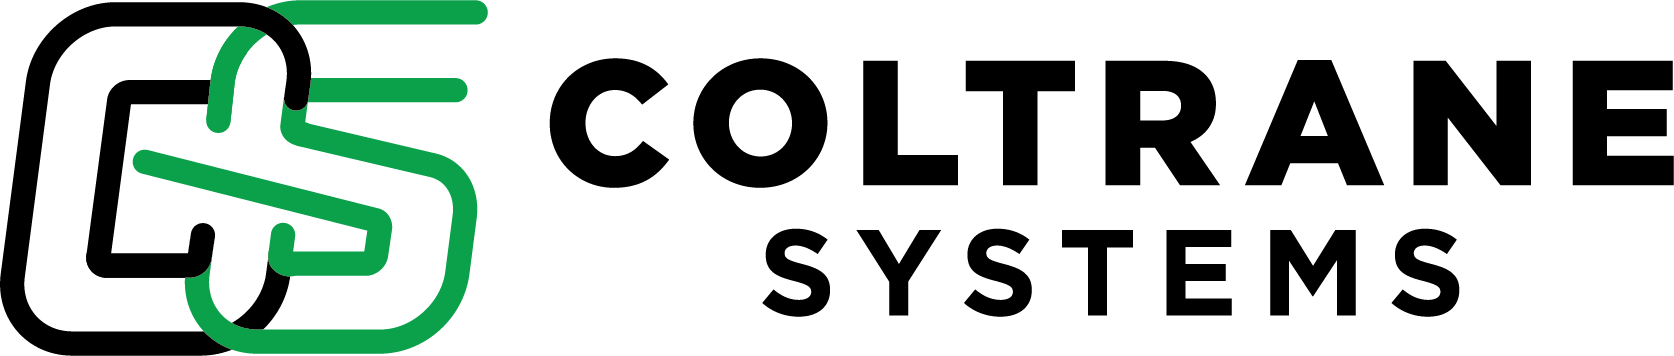 Coltrane Systems Company Logo